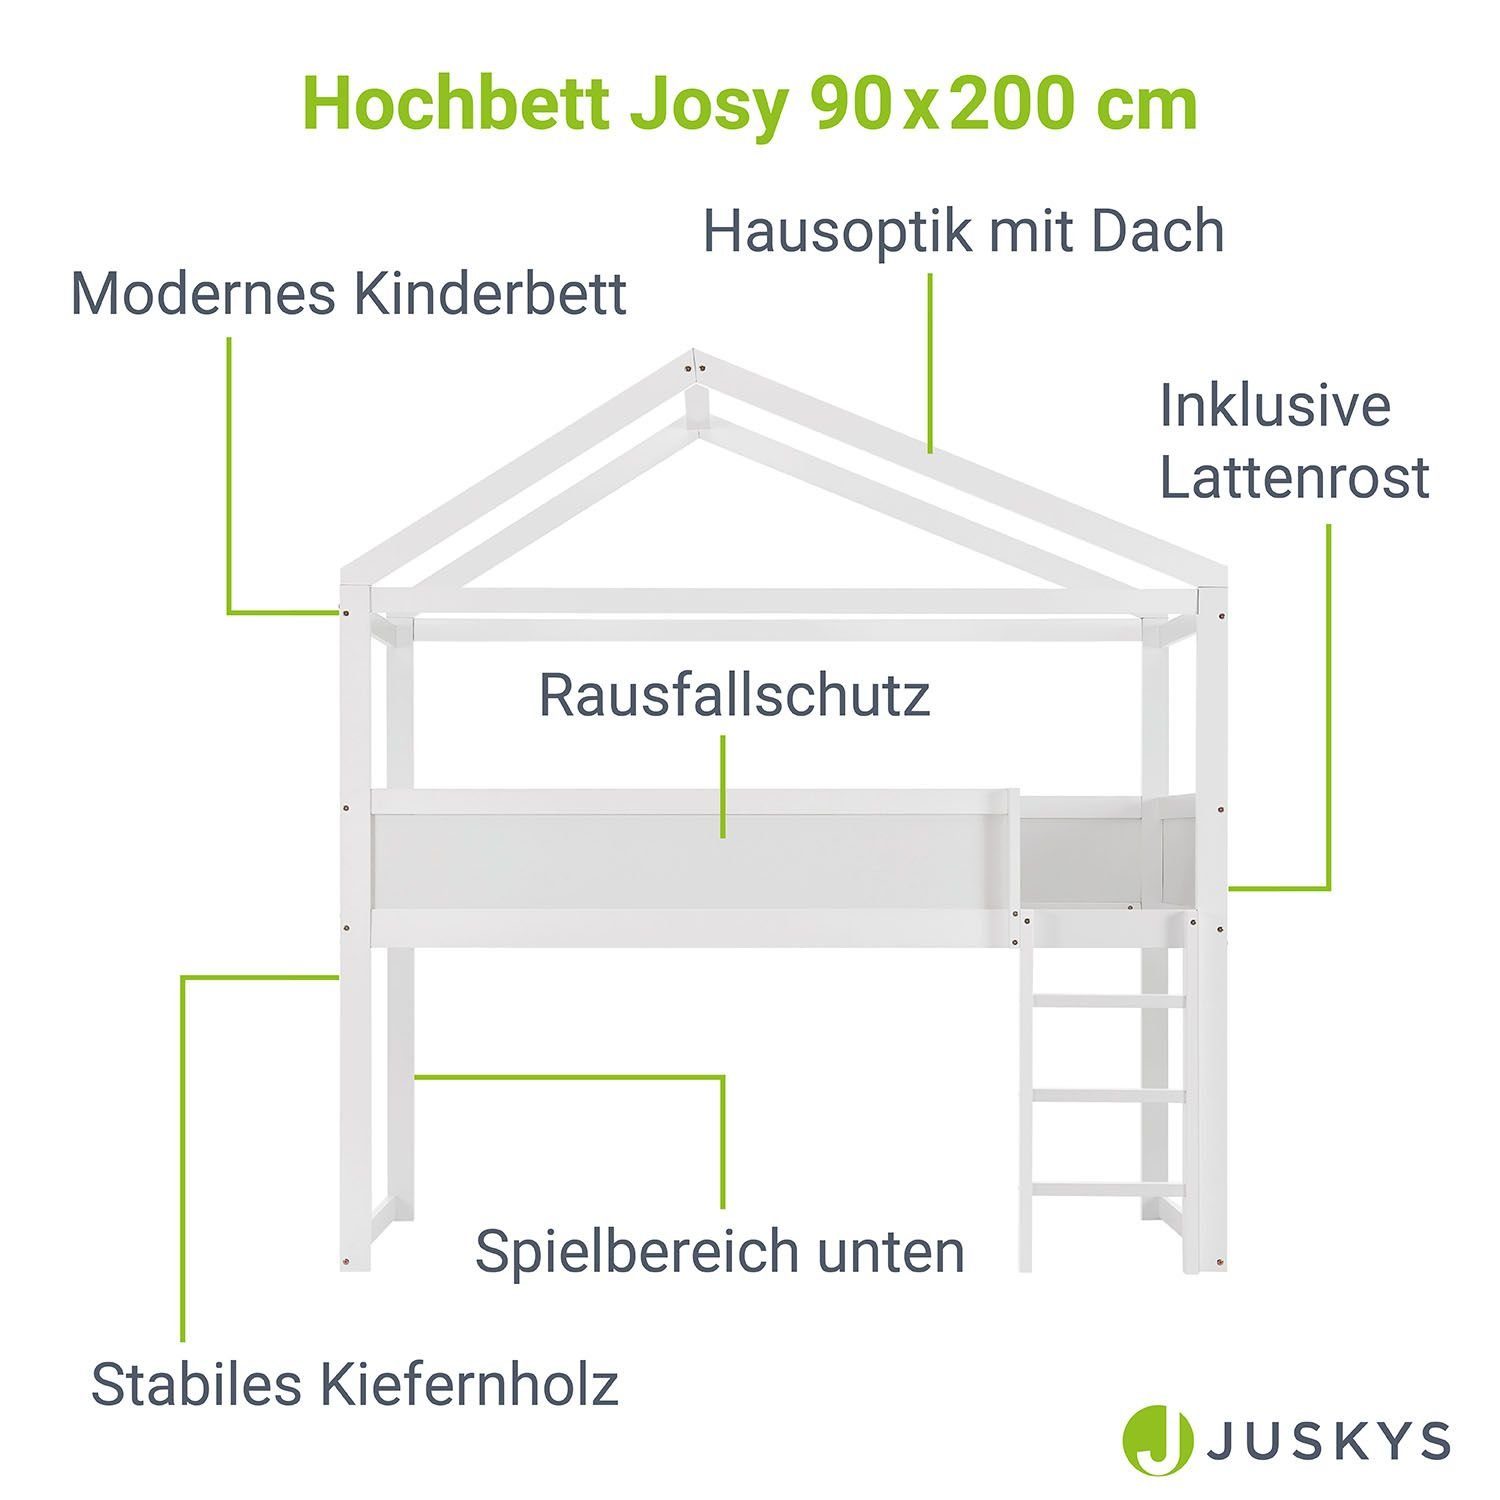 Kinderbett Rausfallschutz, Hochbett, Josy, modernes stabiles Juskys cm, Kiefernholz 90x200